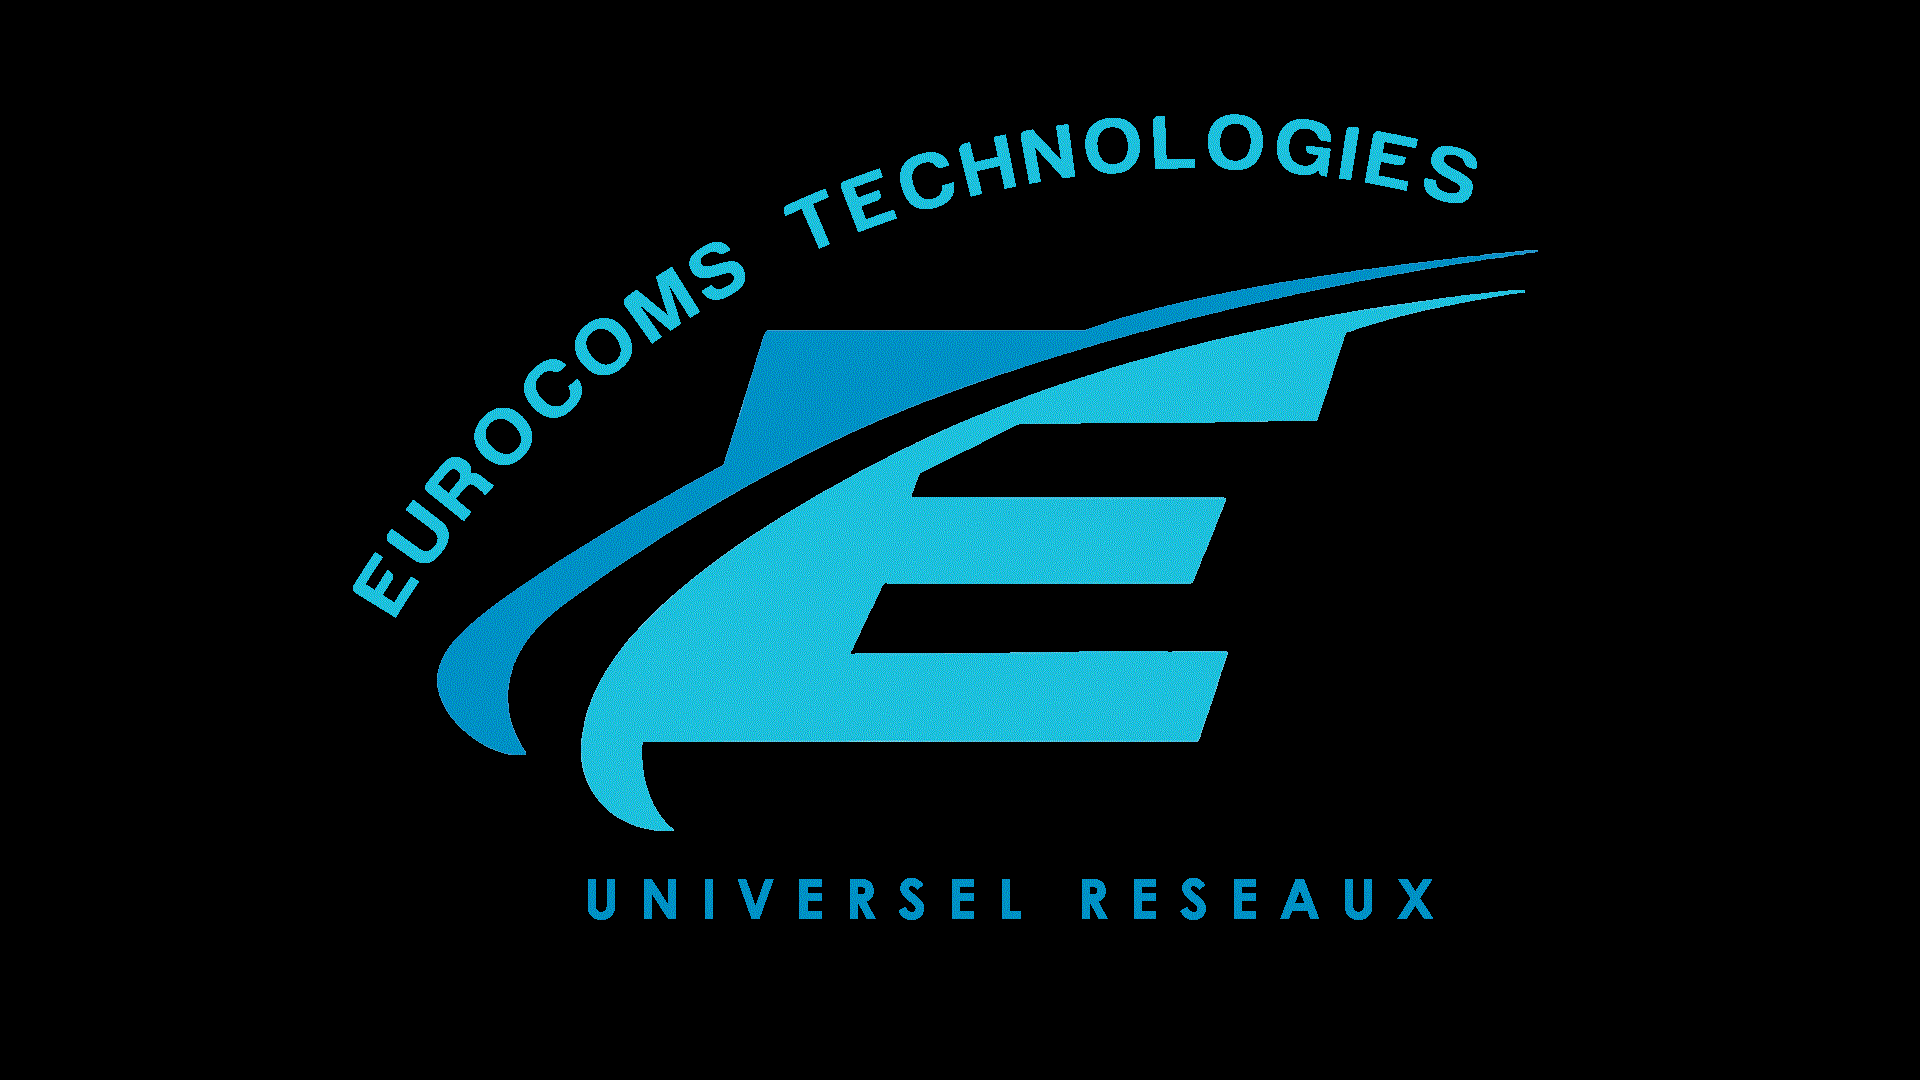 Eurocoms Technologies